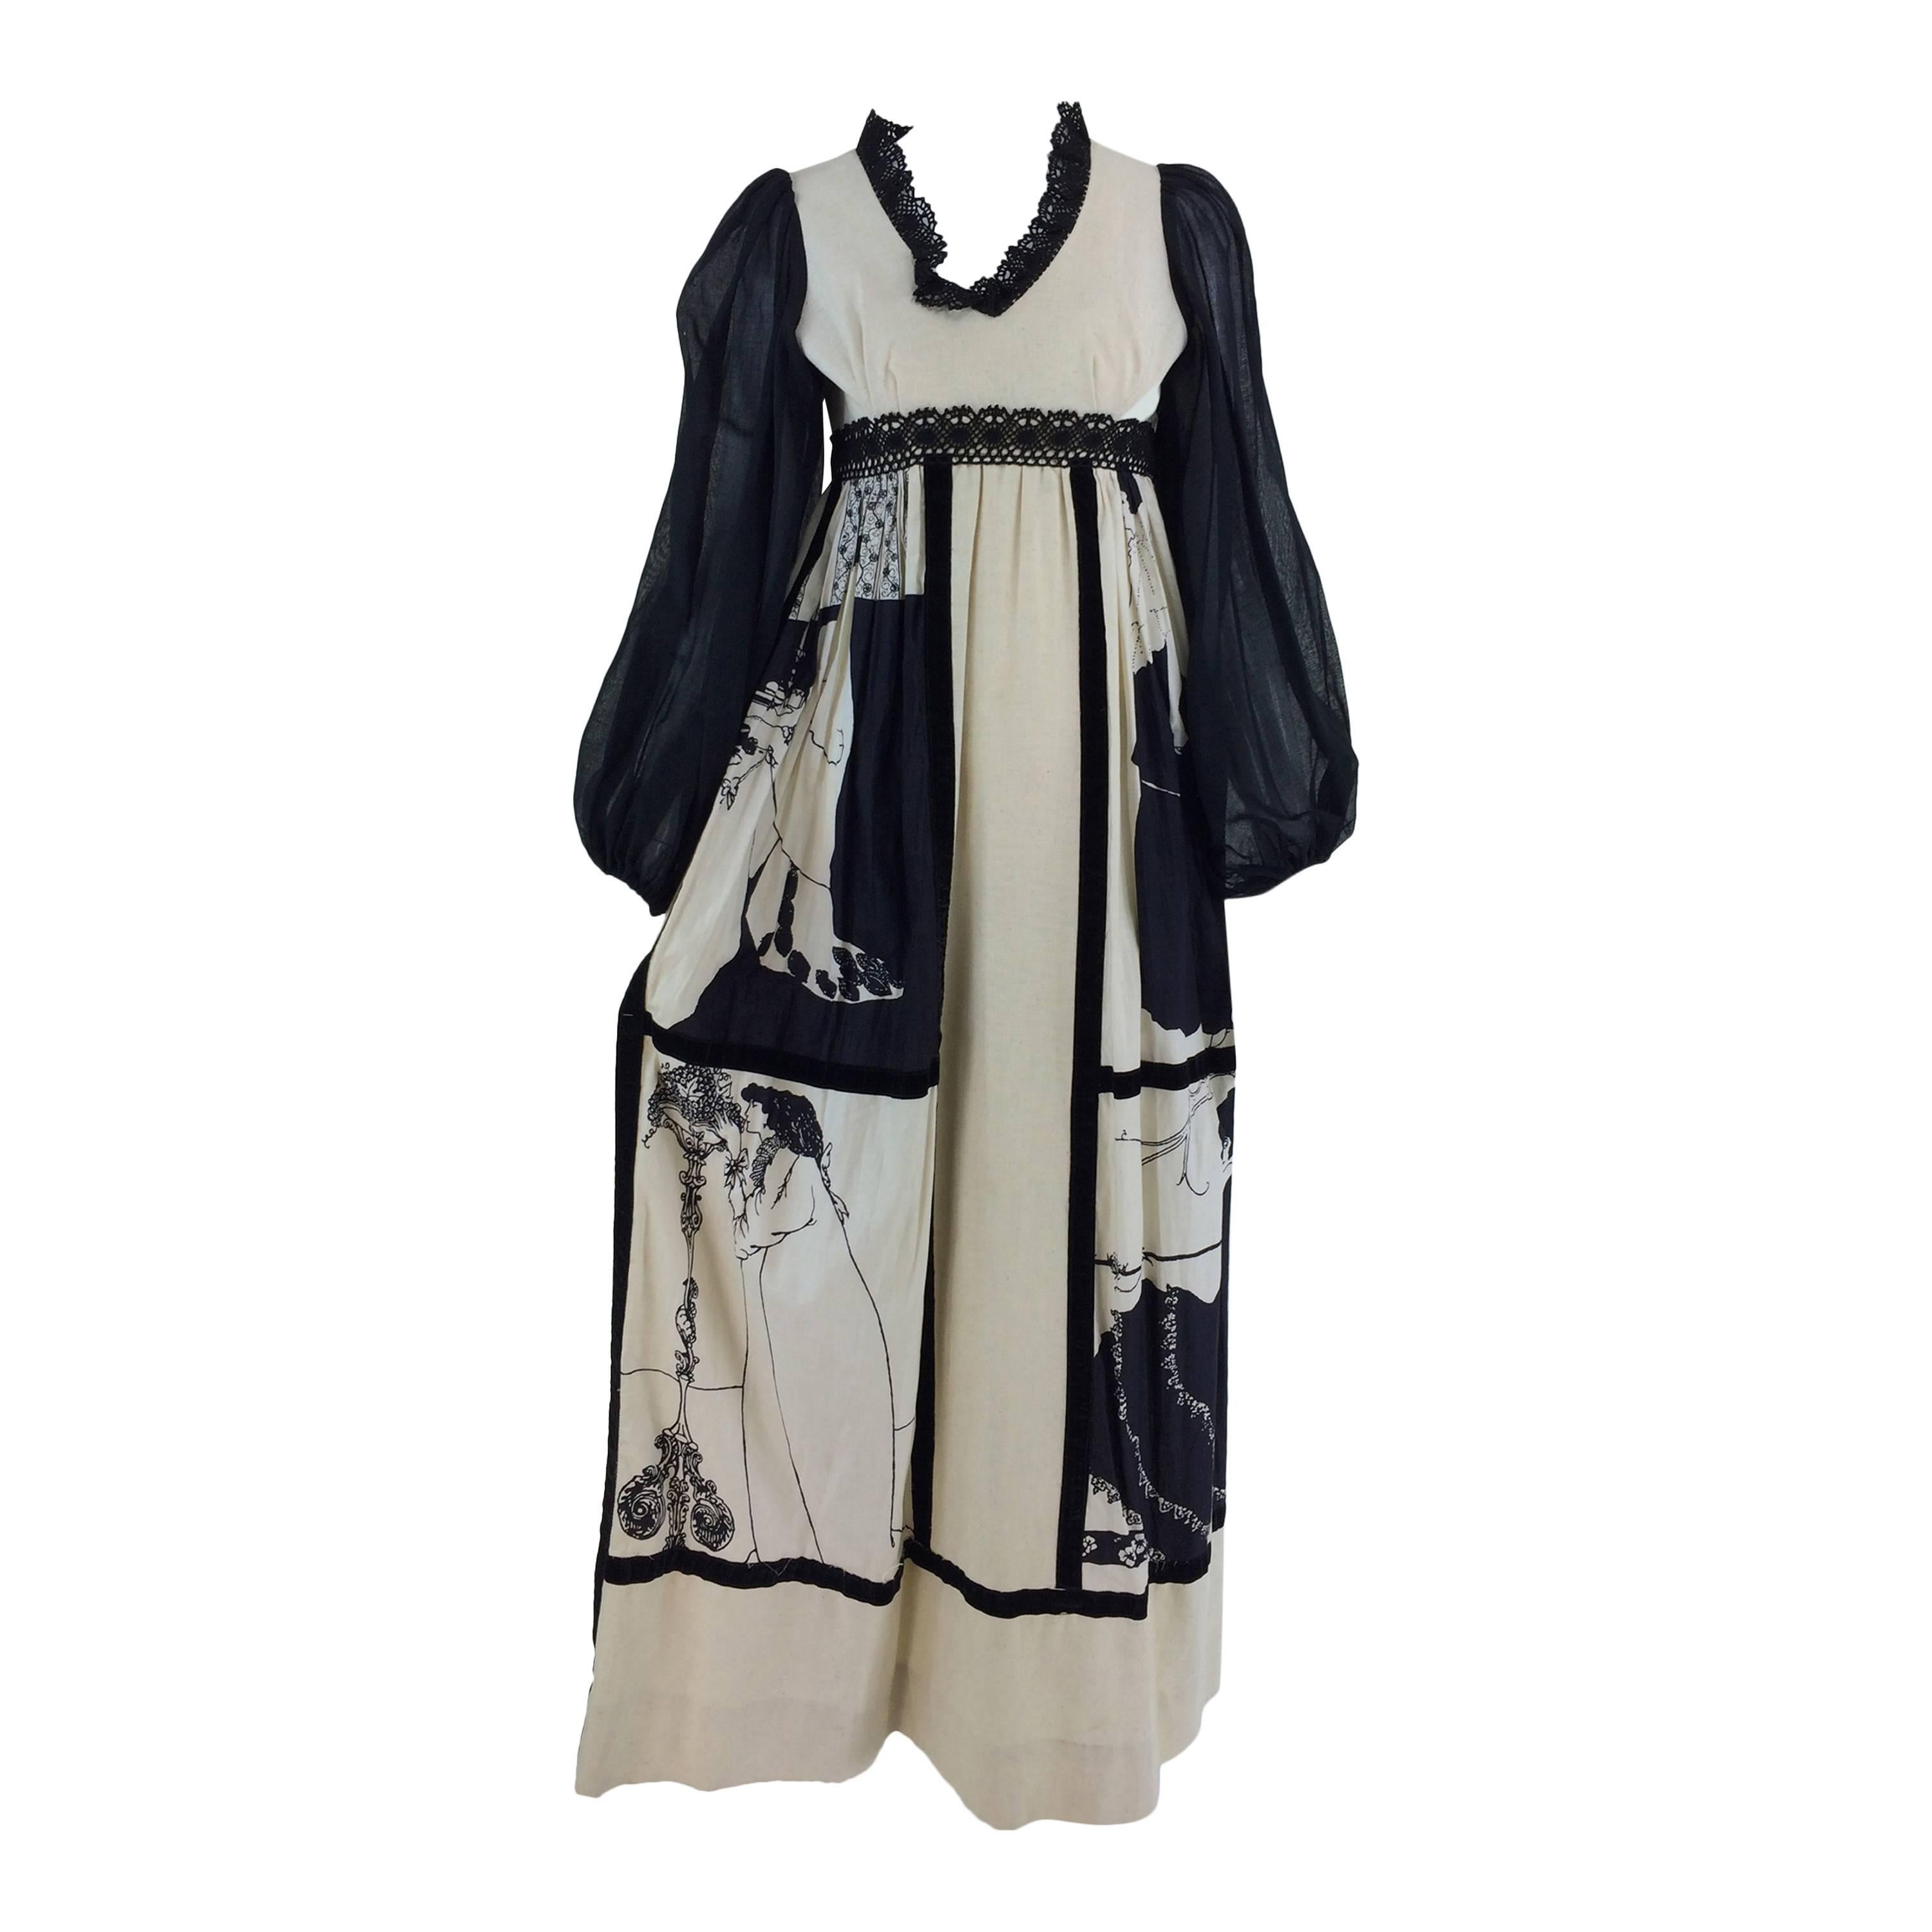 Novelty print Aubrey Beardsley by Charm of Hollywood 1960s maxi dress